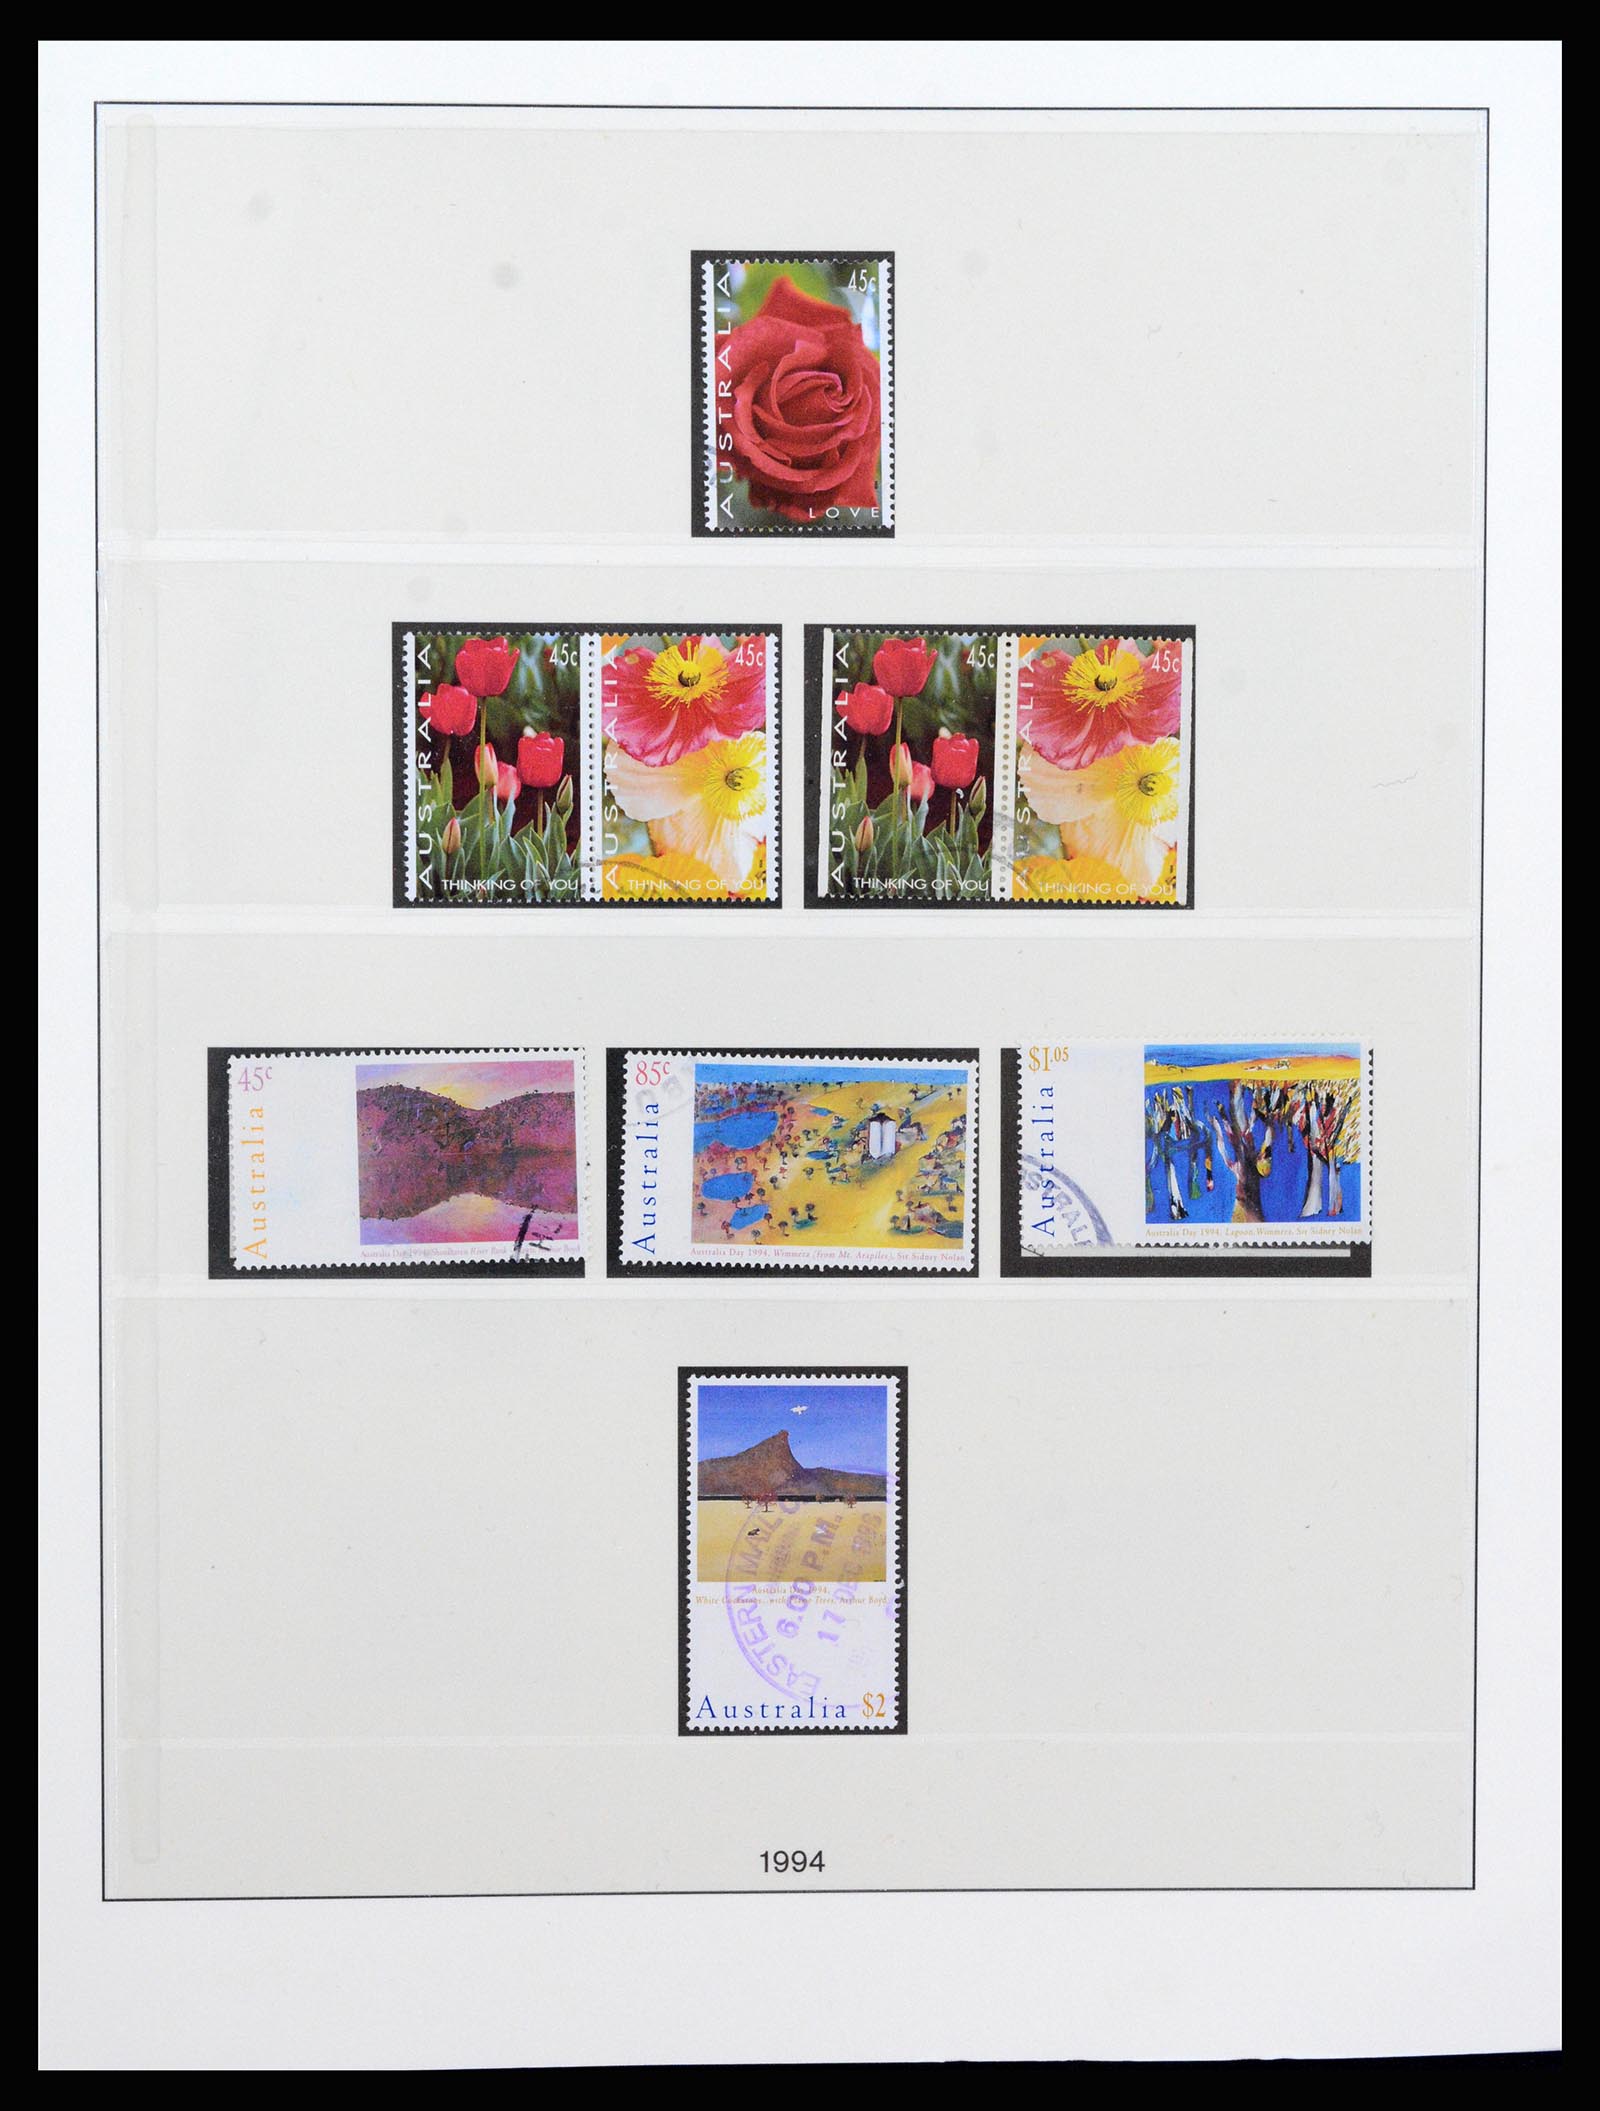 37259 111 - Stamp collection 37259 Australia 1951-2006.